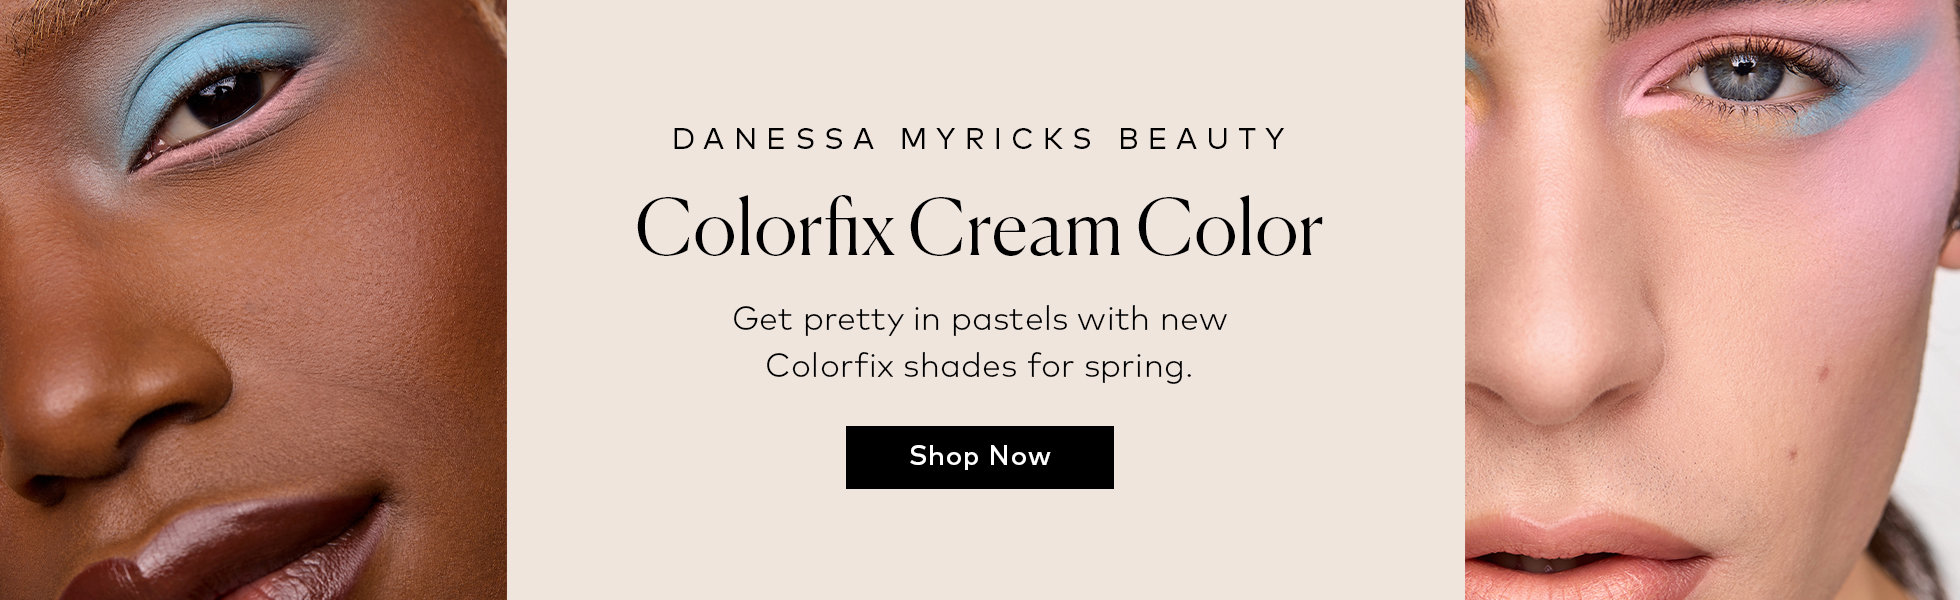 Shop the Danessa Myricks Beauty ColorFix Pastels at Beautylish.com